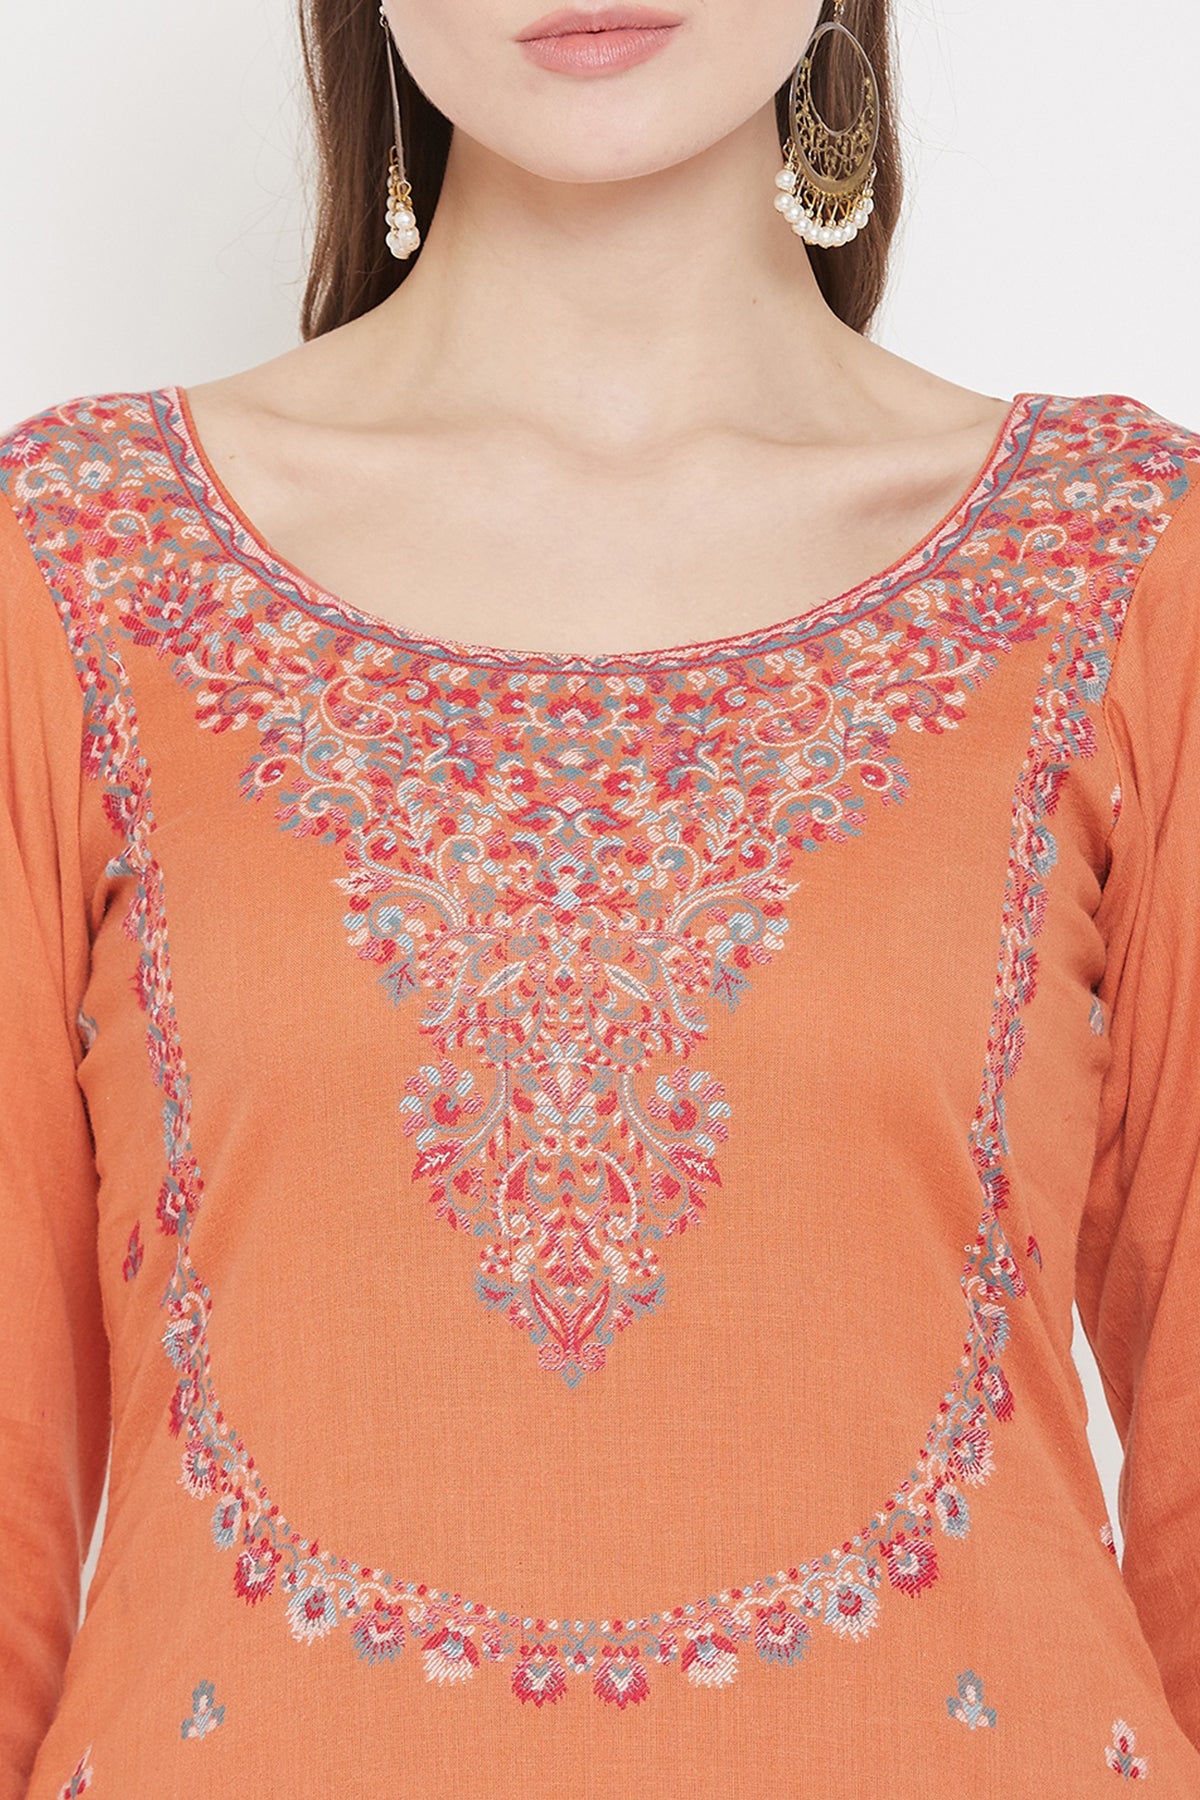 Cotton Kani Woven Orange Dress Material With Cotton Silk Dupatta